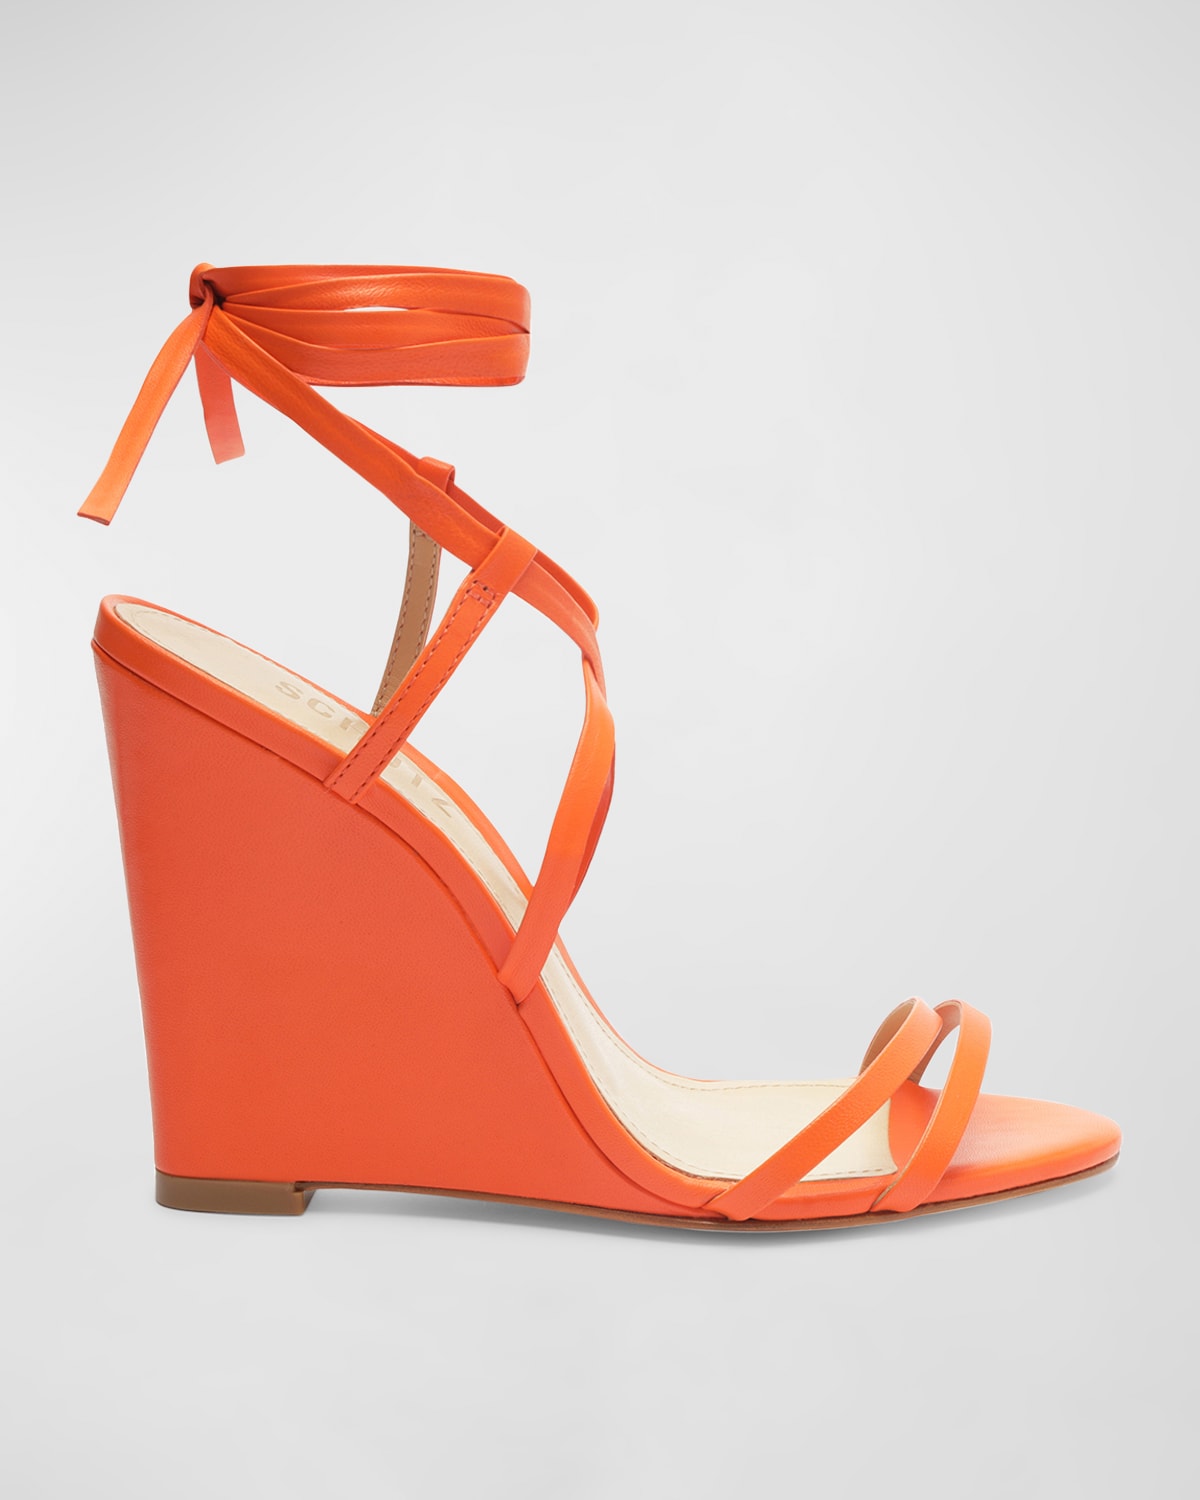 Schutz Deonne Leather Ankle-tie Wedge Sandals In Flame Orange